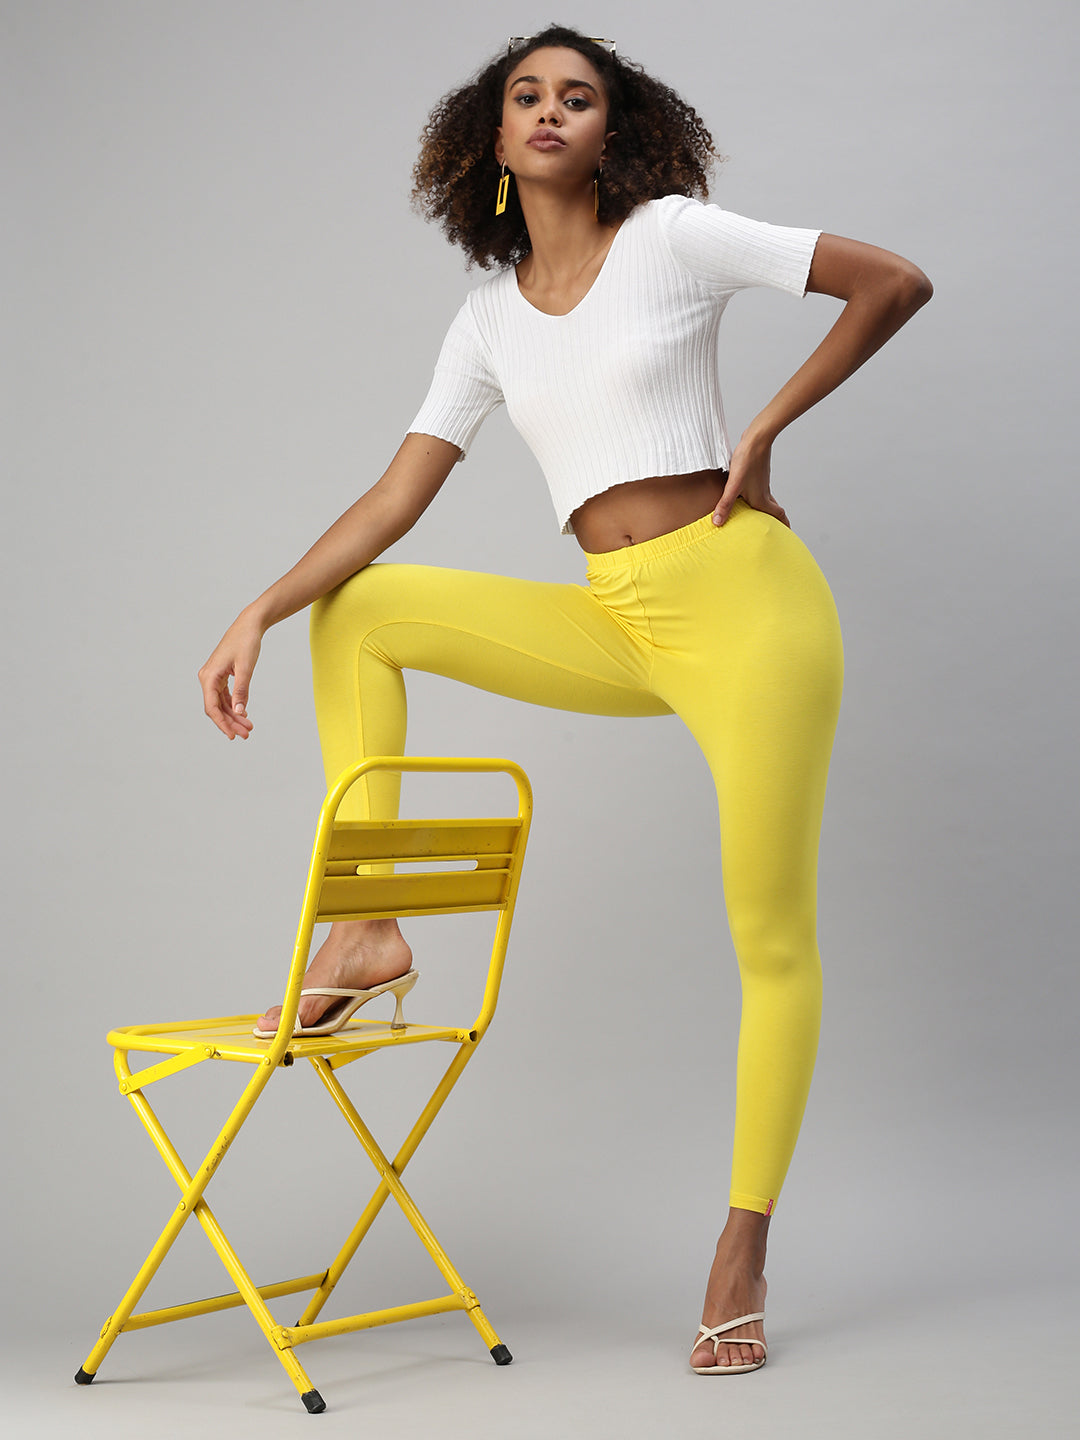 Shop Prisma's Lemon Yellow Ankle Leggings for Fresh Style